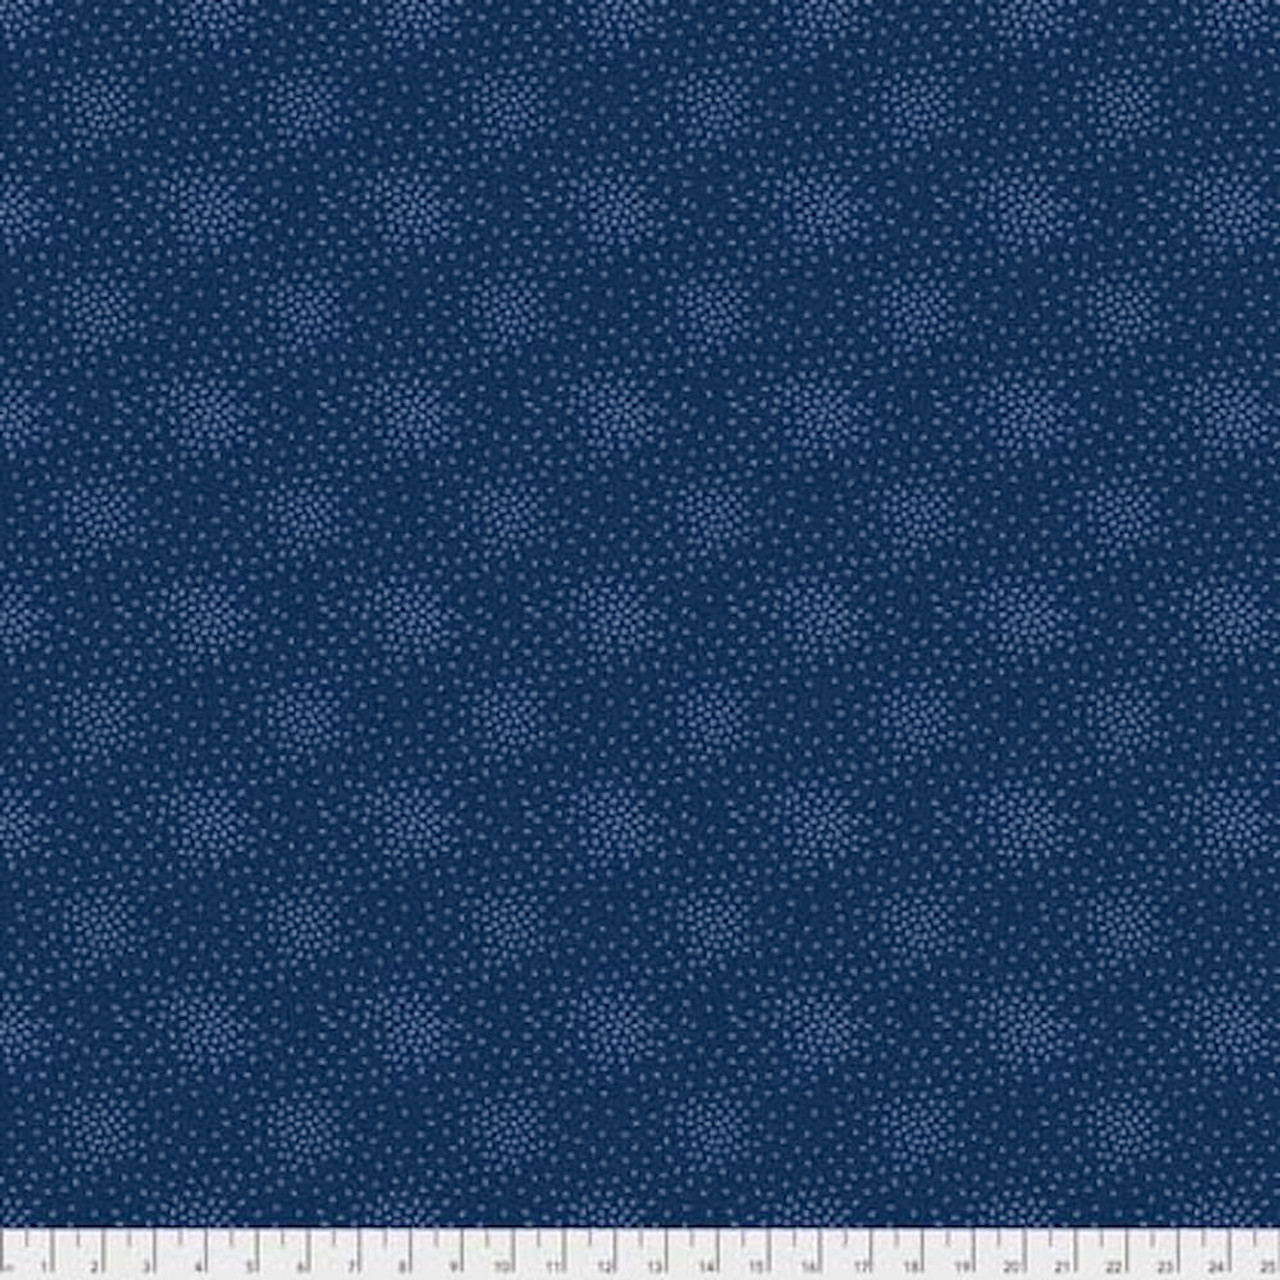 Coats PWCC011 Daisy Daze Confetti Blue Cotton Quilting Fabric By Yd